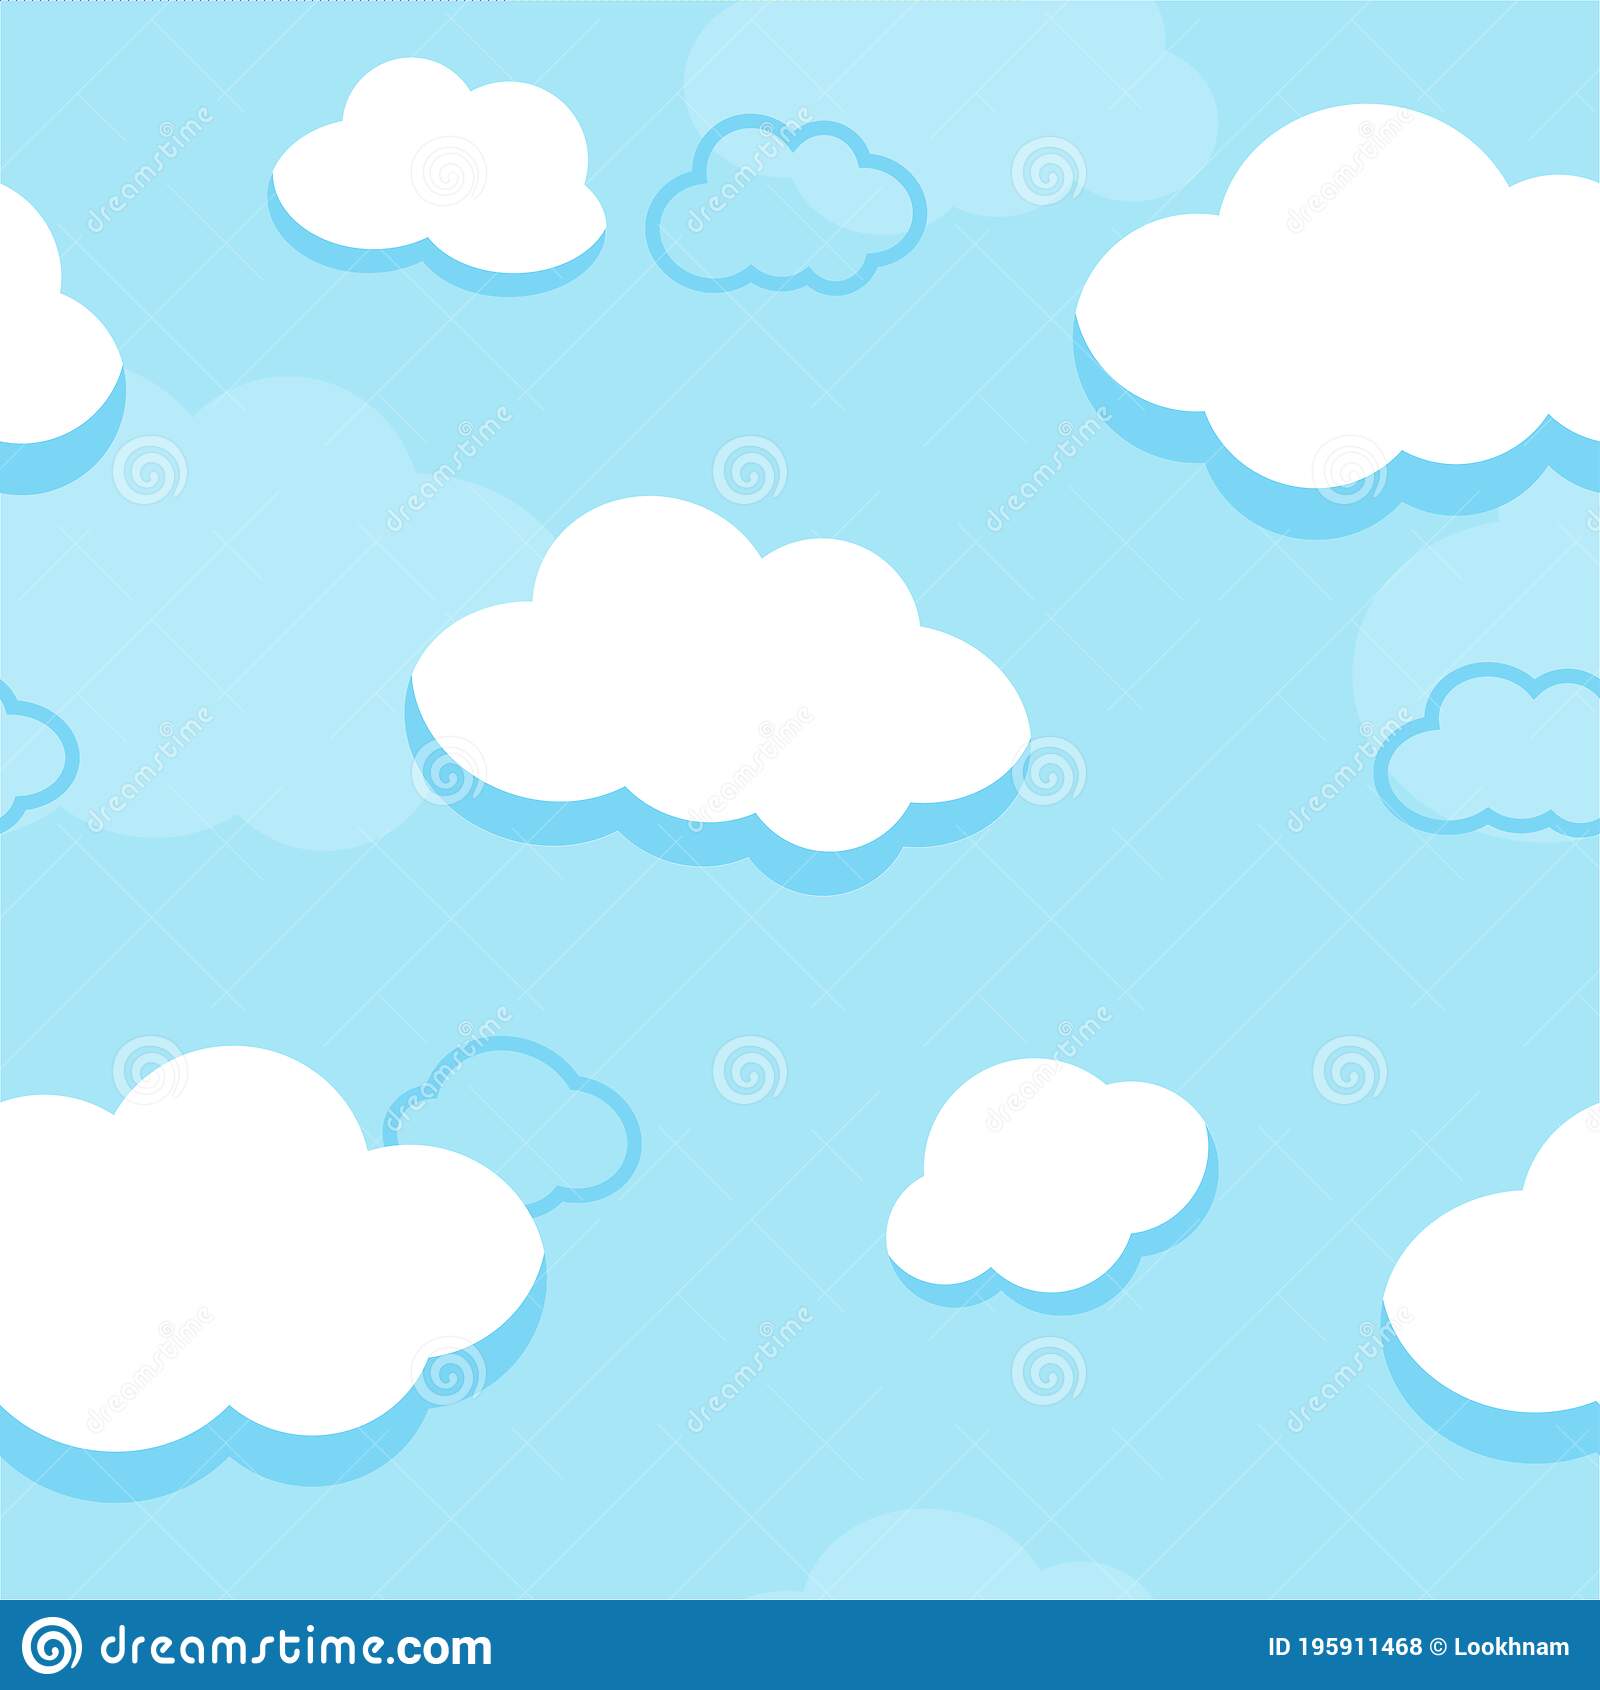 Cute cartoon cloud with light blue sky wallpaper for kid bedroom stock vector